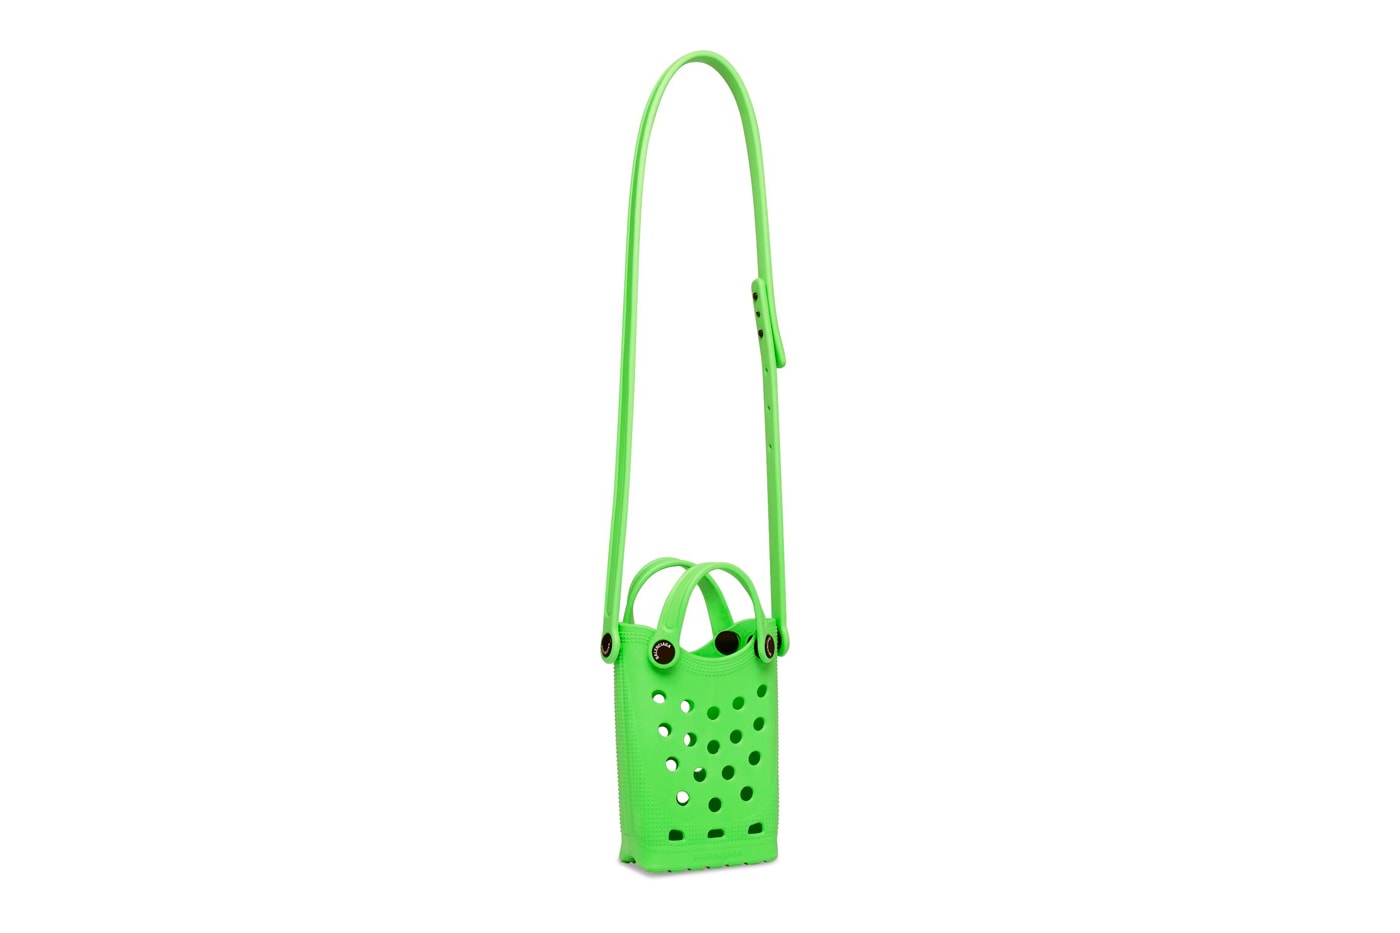 Balenciaga meets Crocs for “interesting” rubber tote bag, phone holder -  Yanko Design